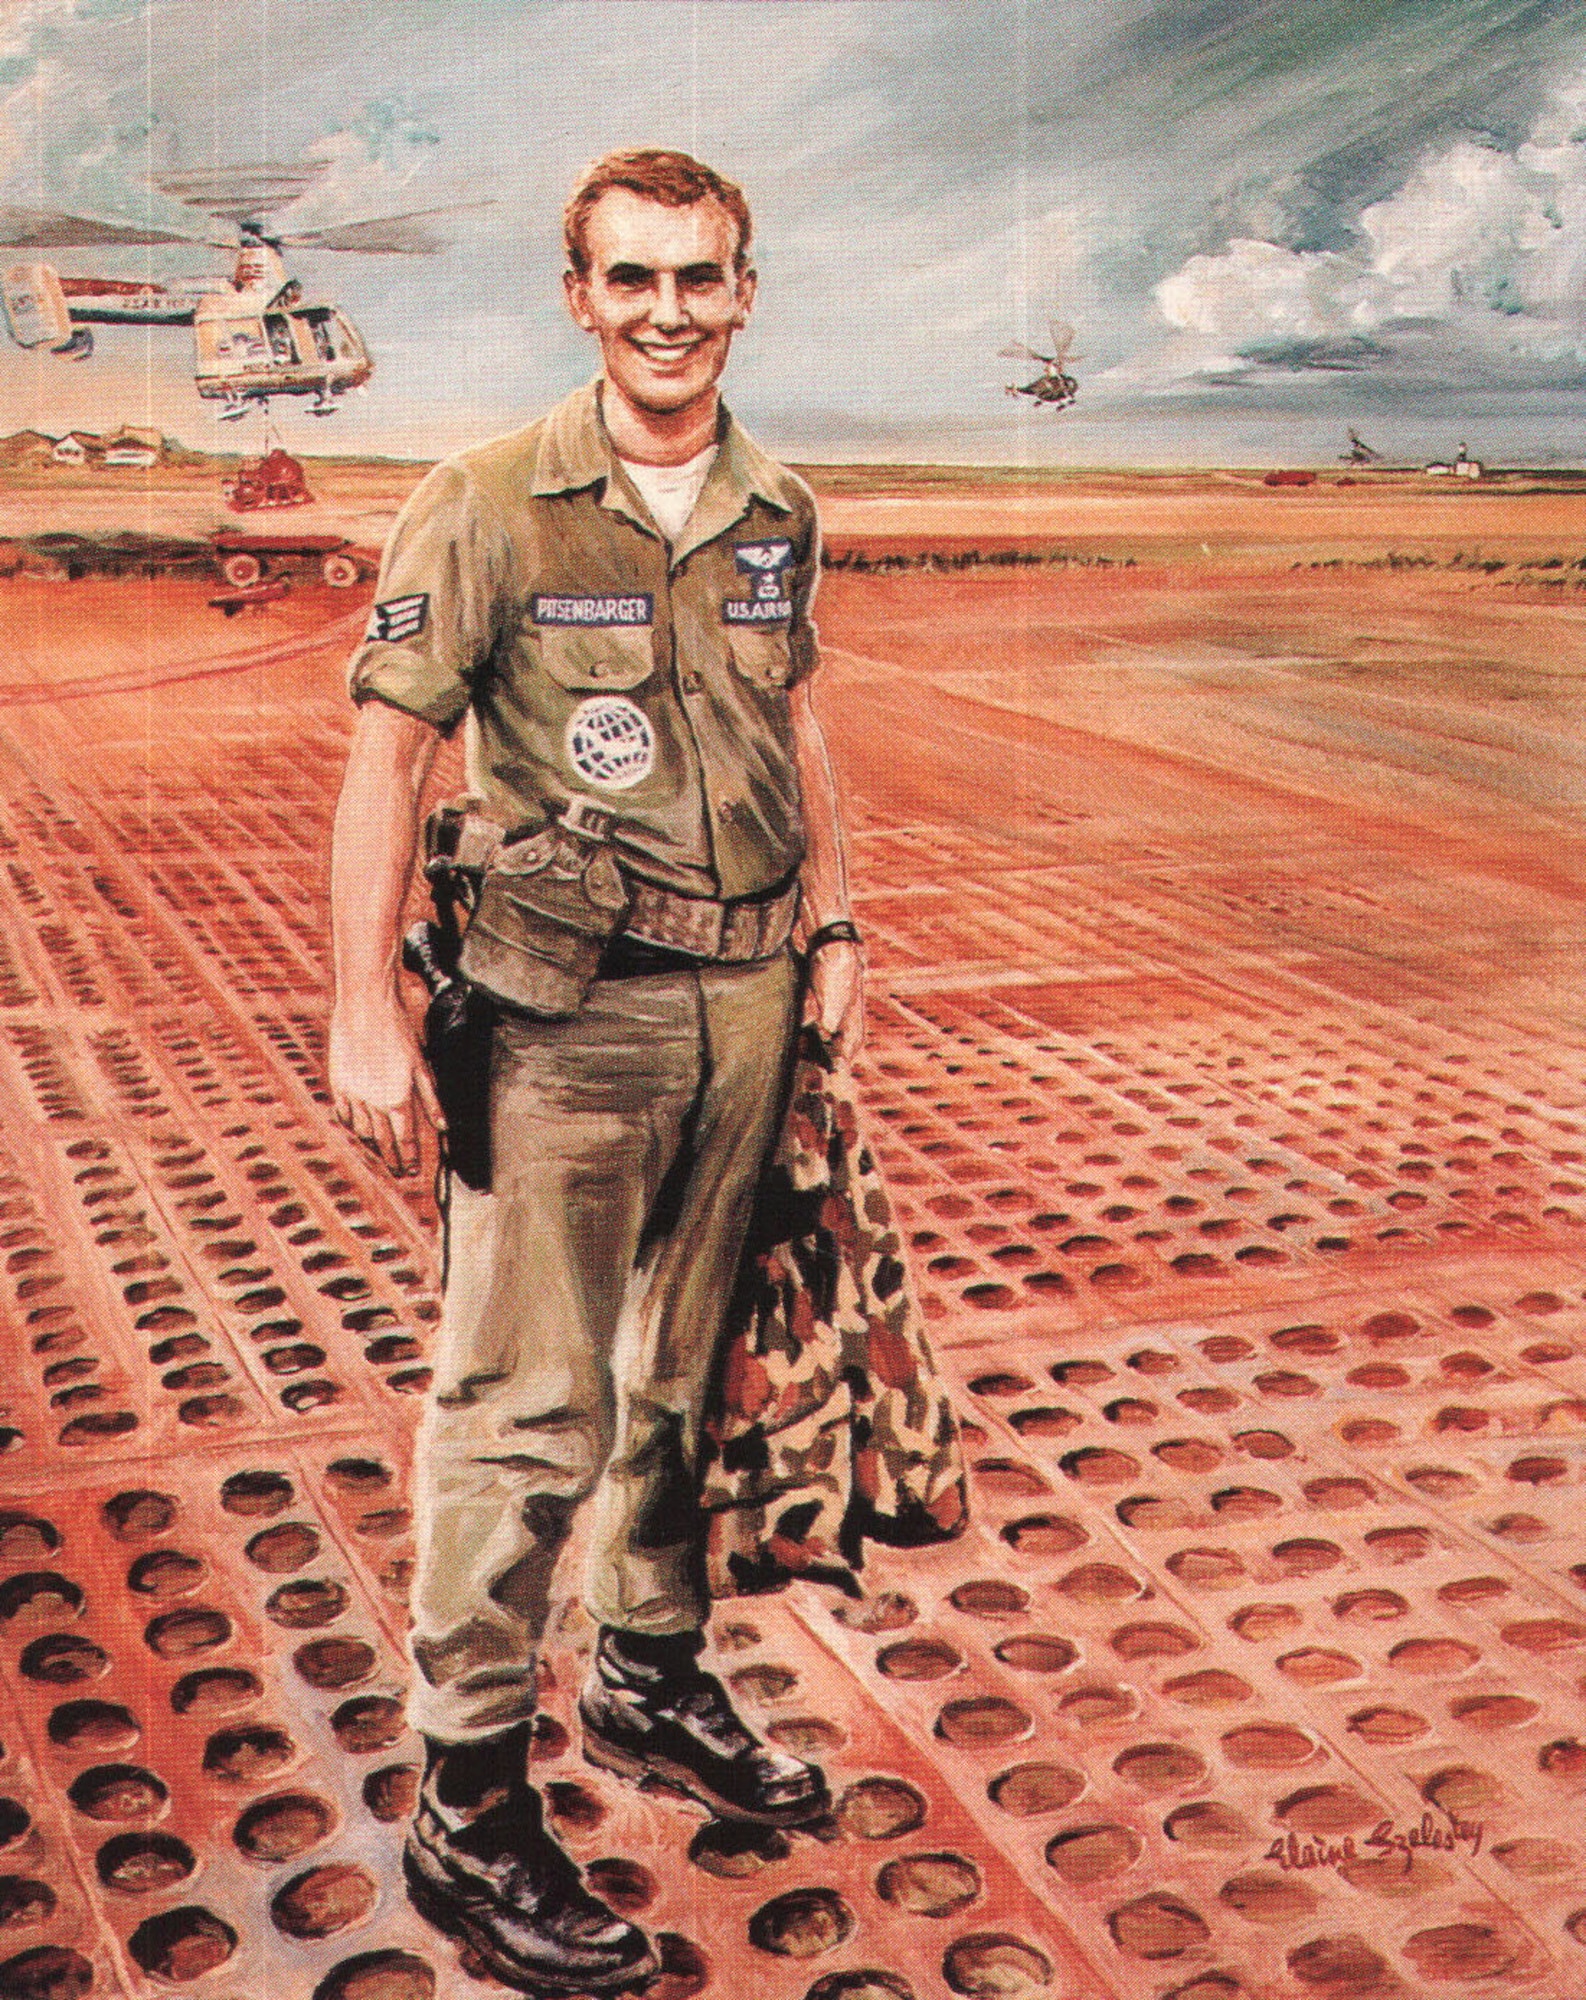 From the Airmen Heritage Series booklet, Airmen Memorial Museum.  Medal of Honor recipient Vietnam.